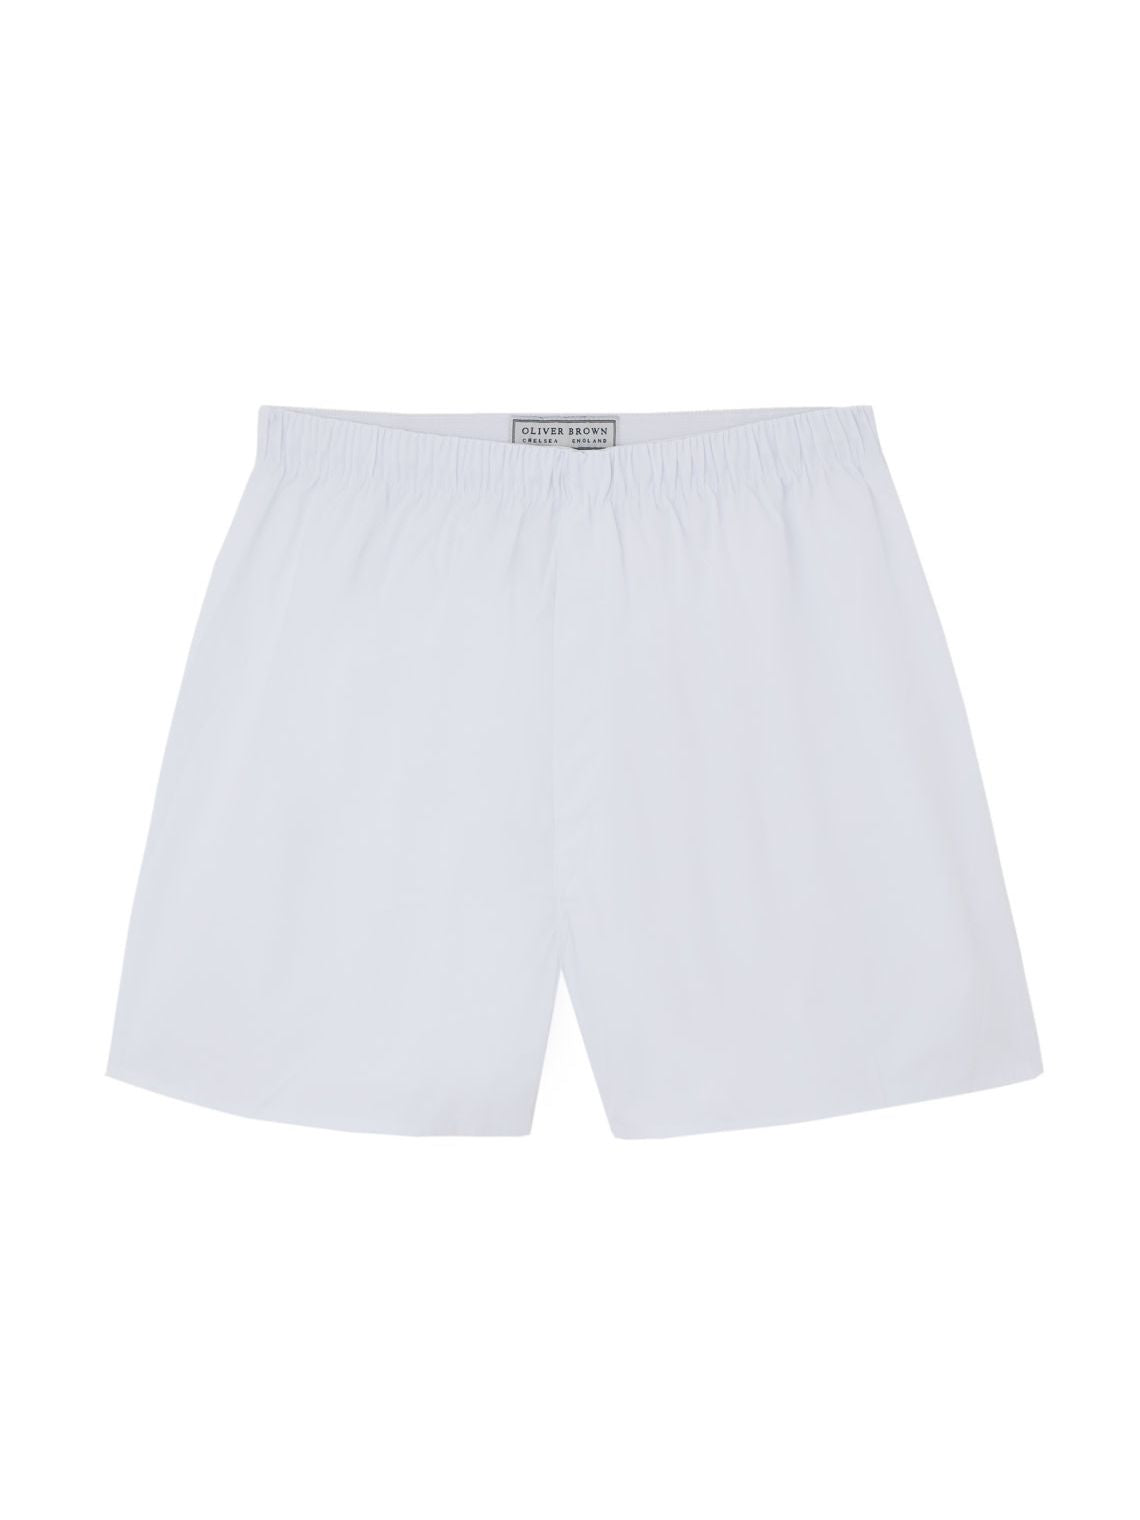 Cotton Boxer Shorts, Plain - White